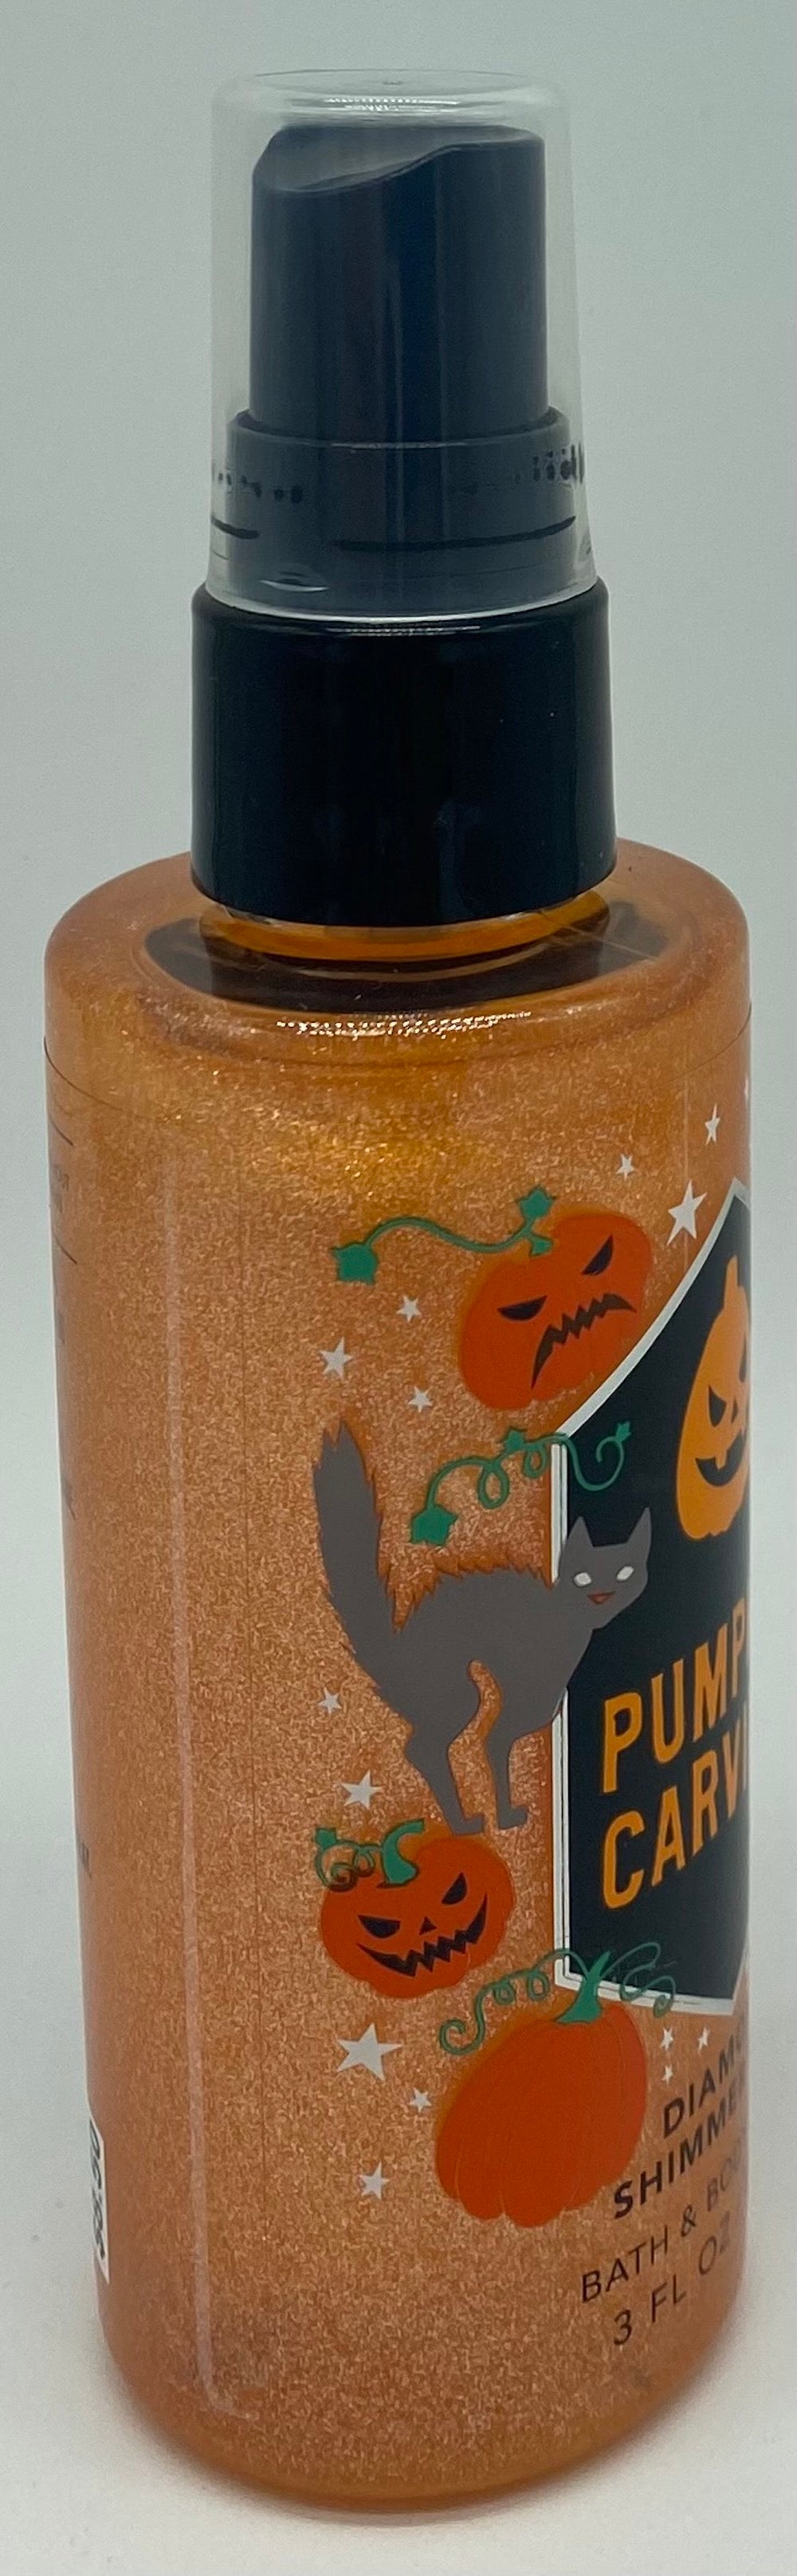 Bath and Body Works Halloween Pumpkin Carving Diamond Shimmer Mist 3 FL OZ New